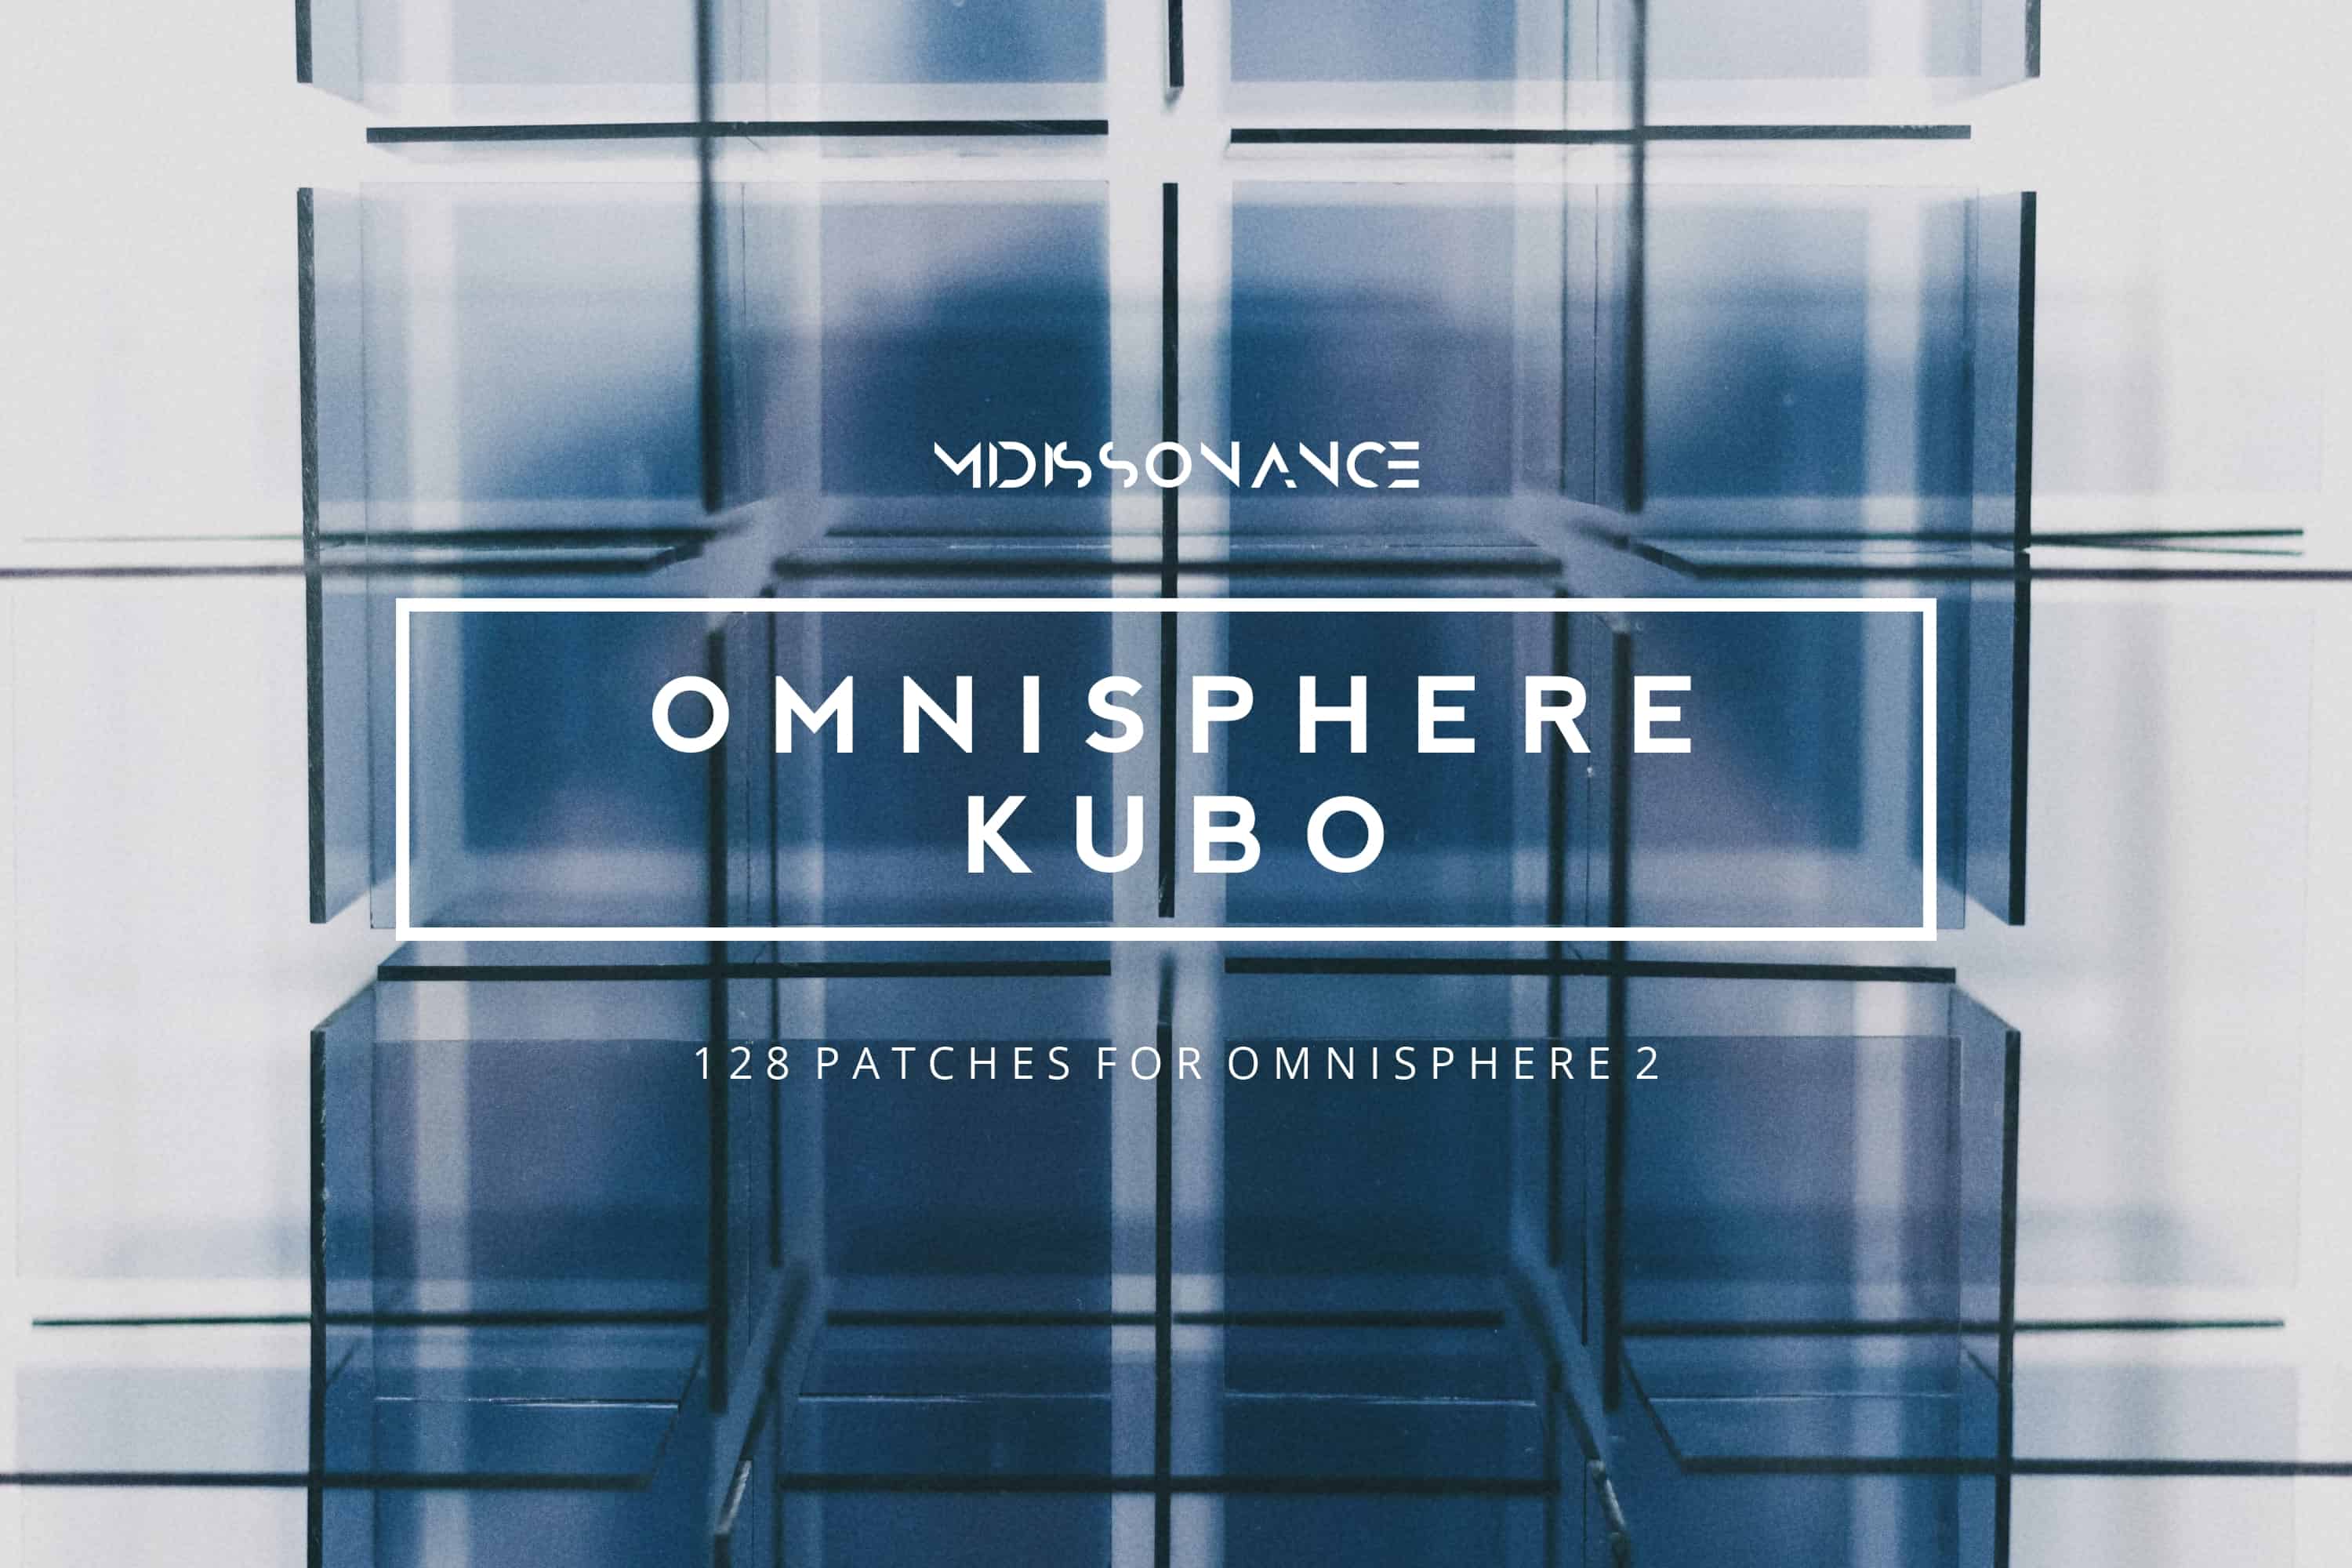 MIDIssonance Omnisphere Kubo – Available Now